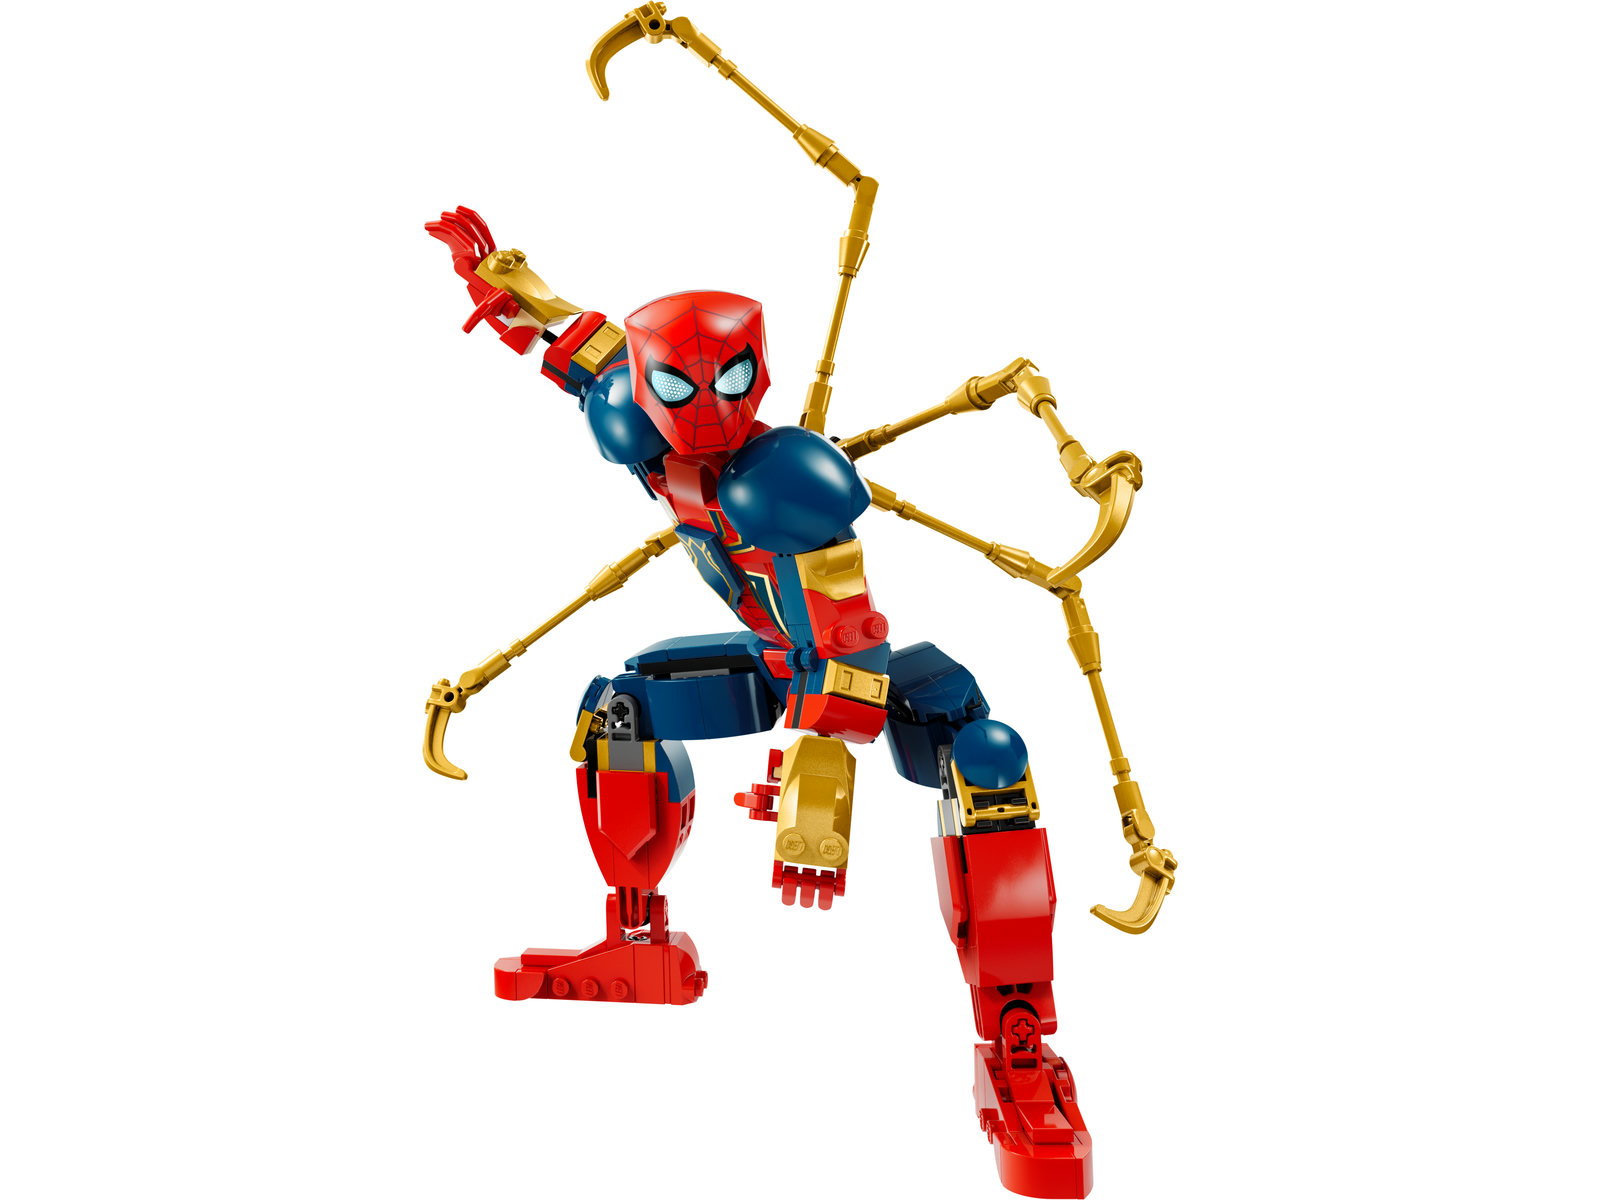 LEGO® Marvel 76298 - Iron Spider-Man Baufigur